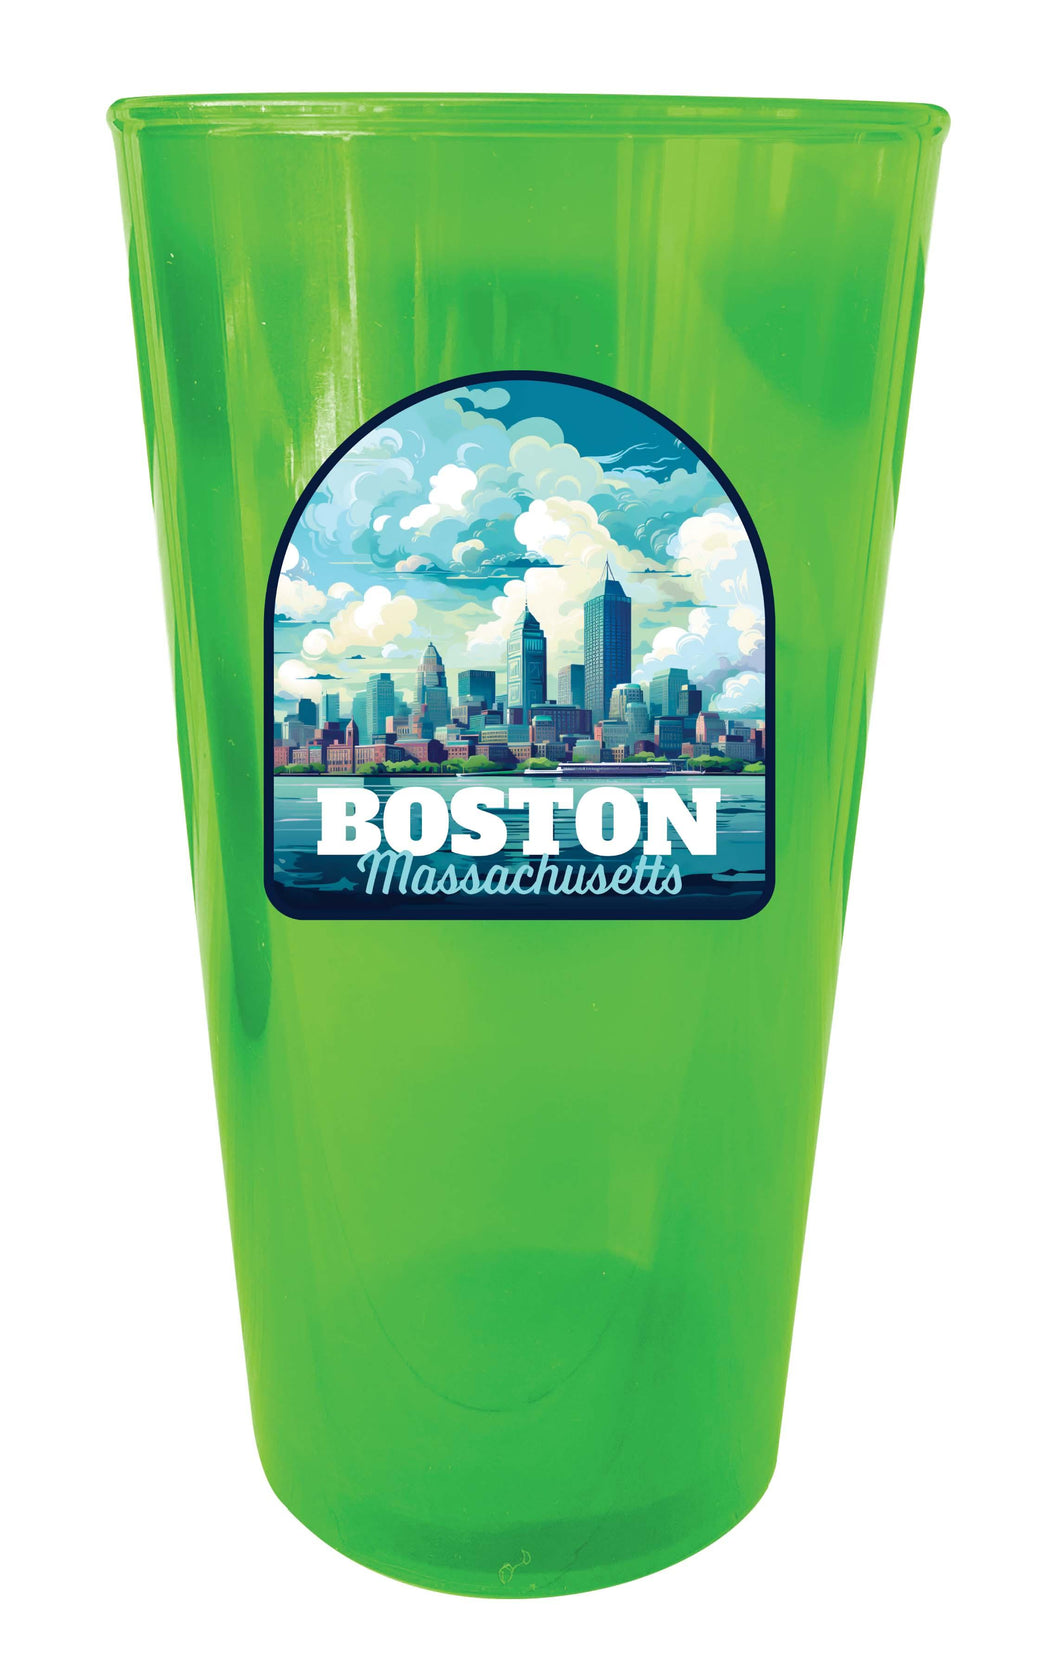 Boston Massachusetts A Souvenir Plastic 16 oz pint